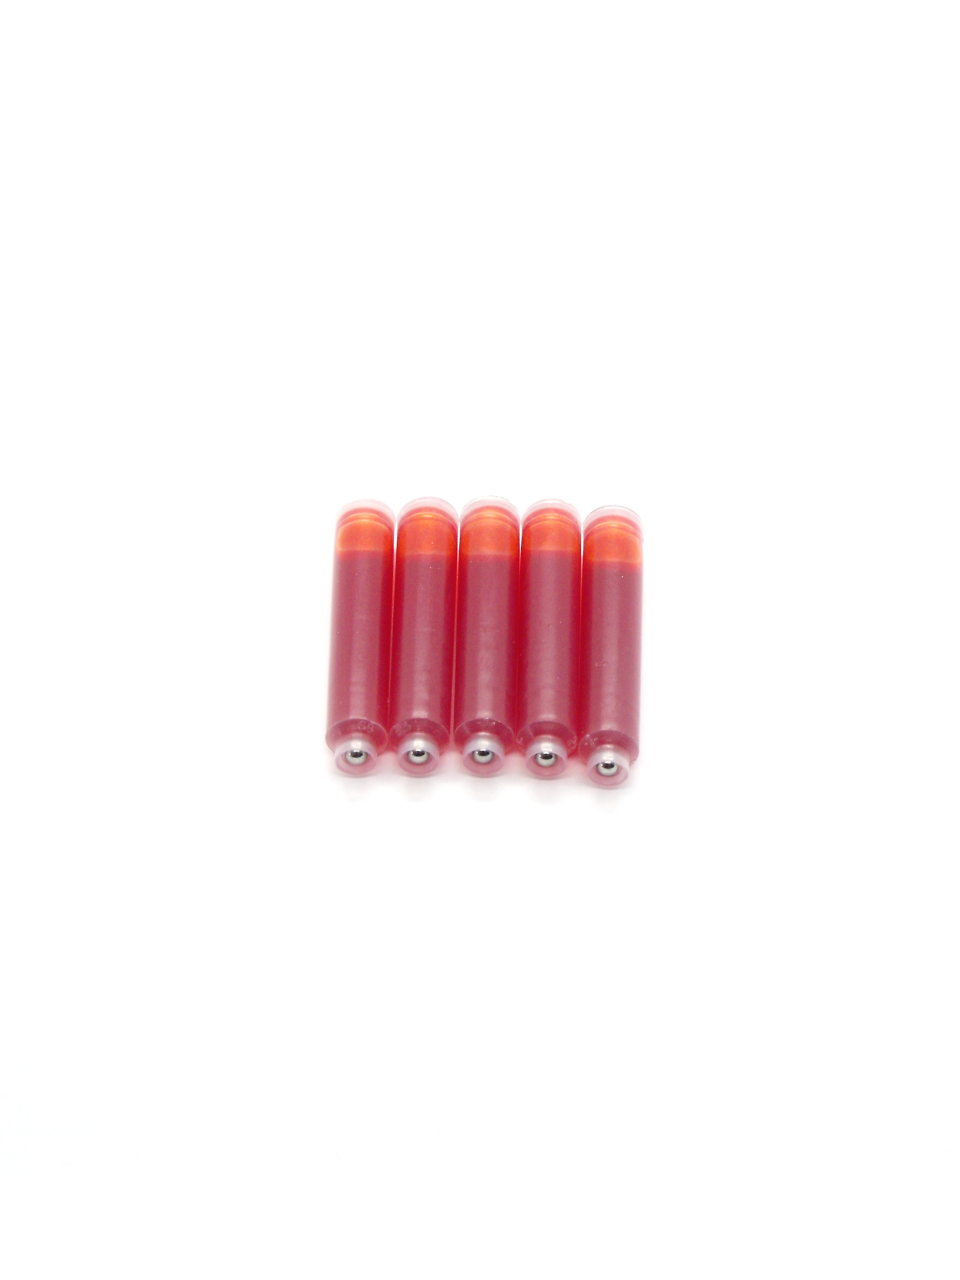 Top Ink Cartridges For Porsche Fountain Pens (Orange)